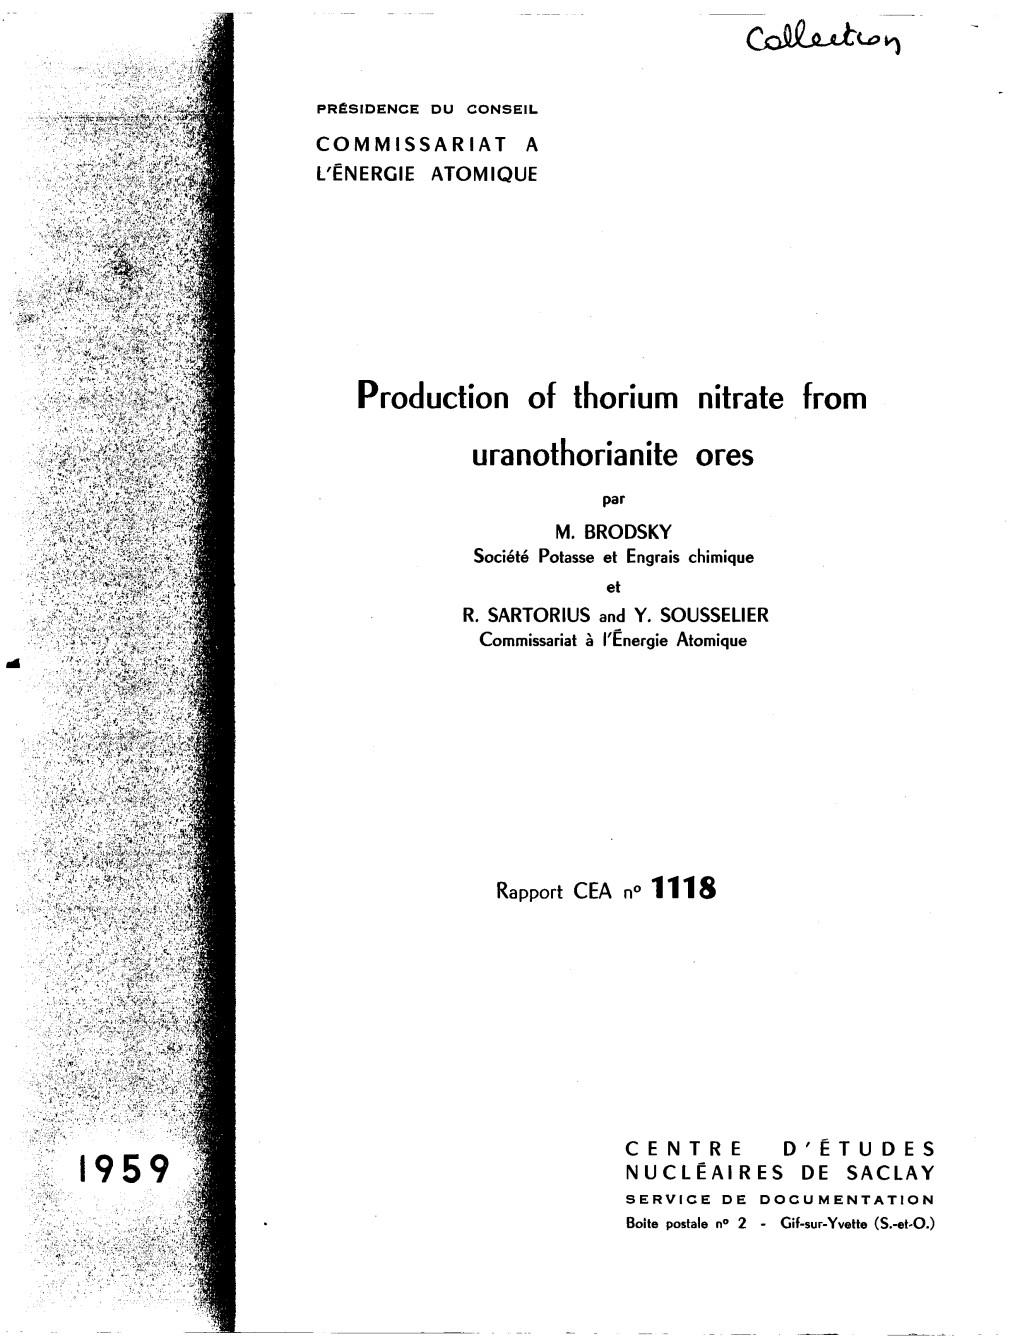 Production of Thorium Nitrate from Uranothorianite Ores